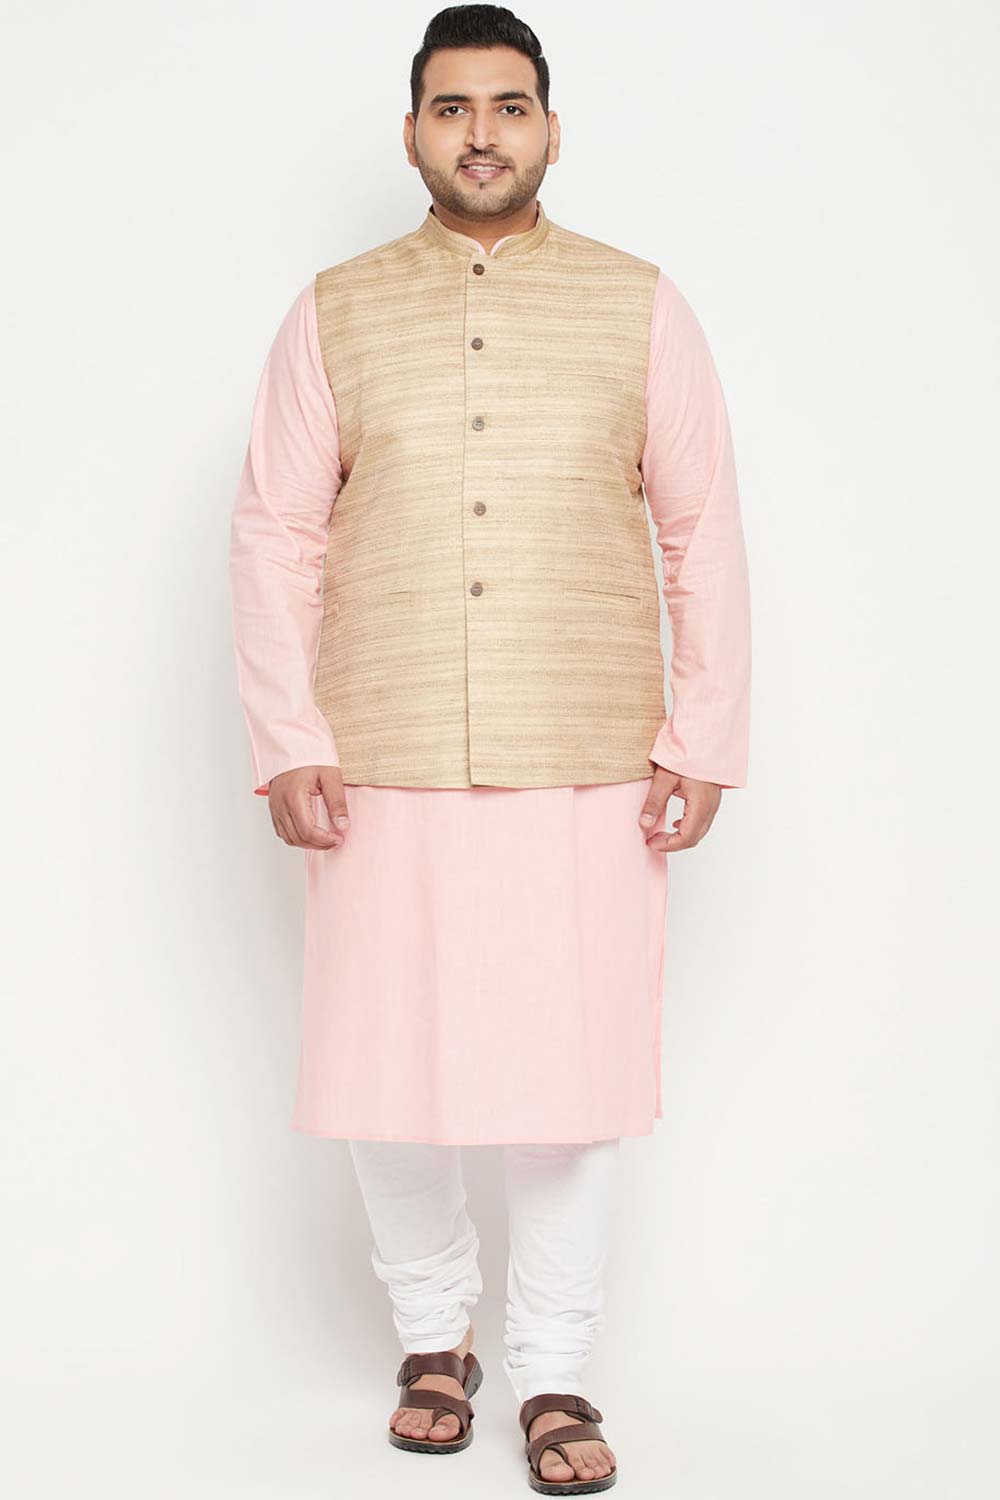 Buy Men's Silk Blend Solid Nehru Jacket in Beige - Zoom Out